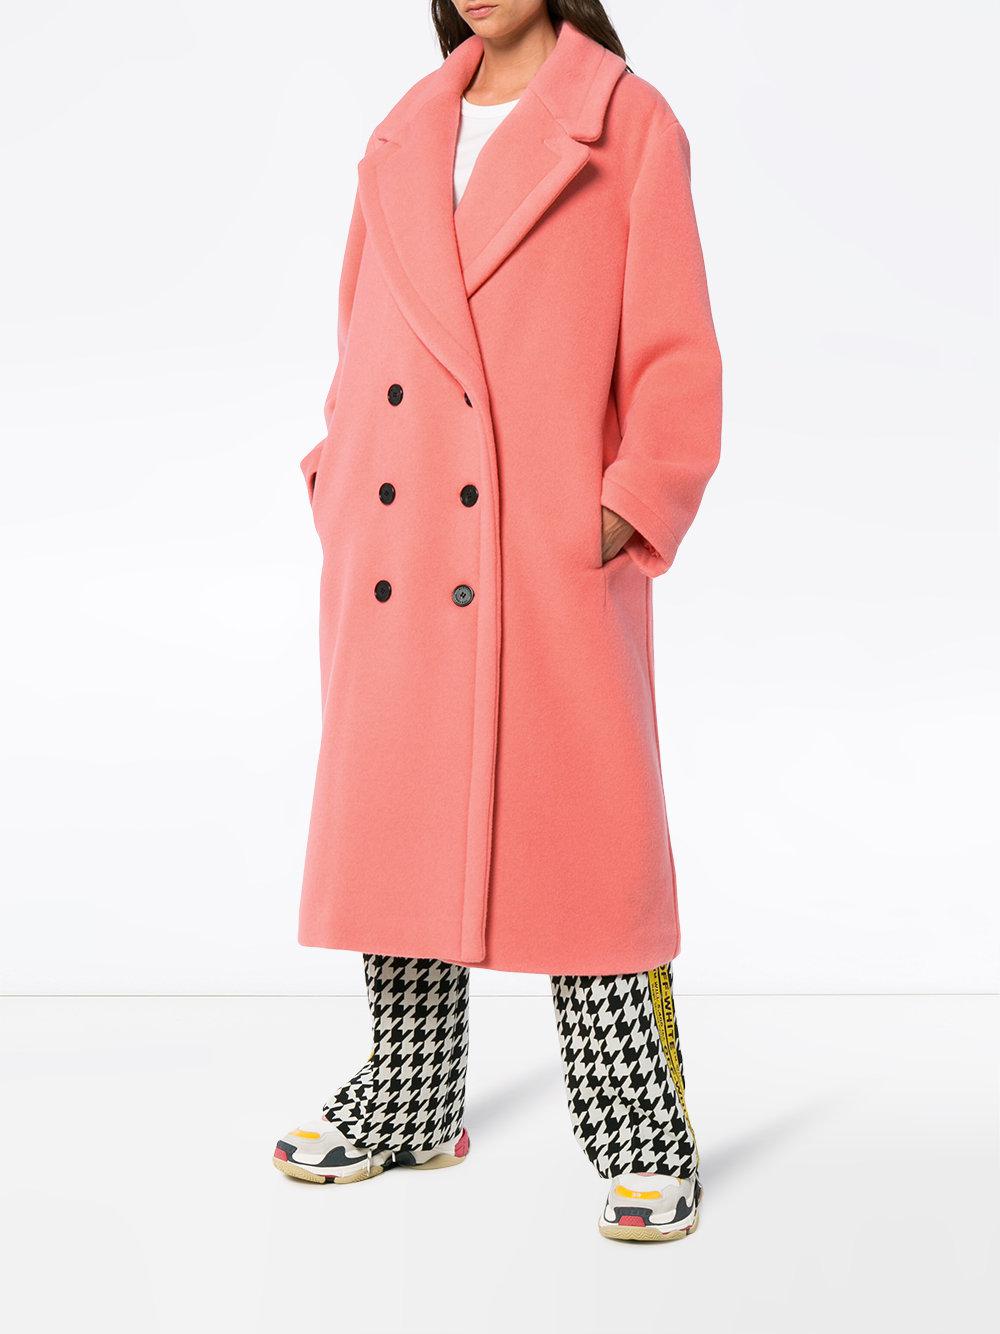 burberry pink wool coat